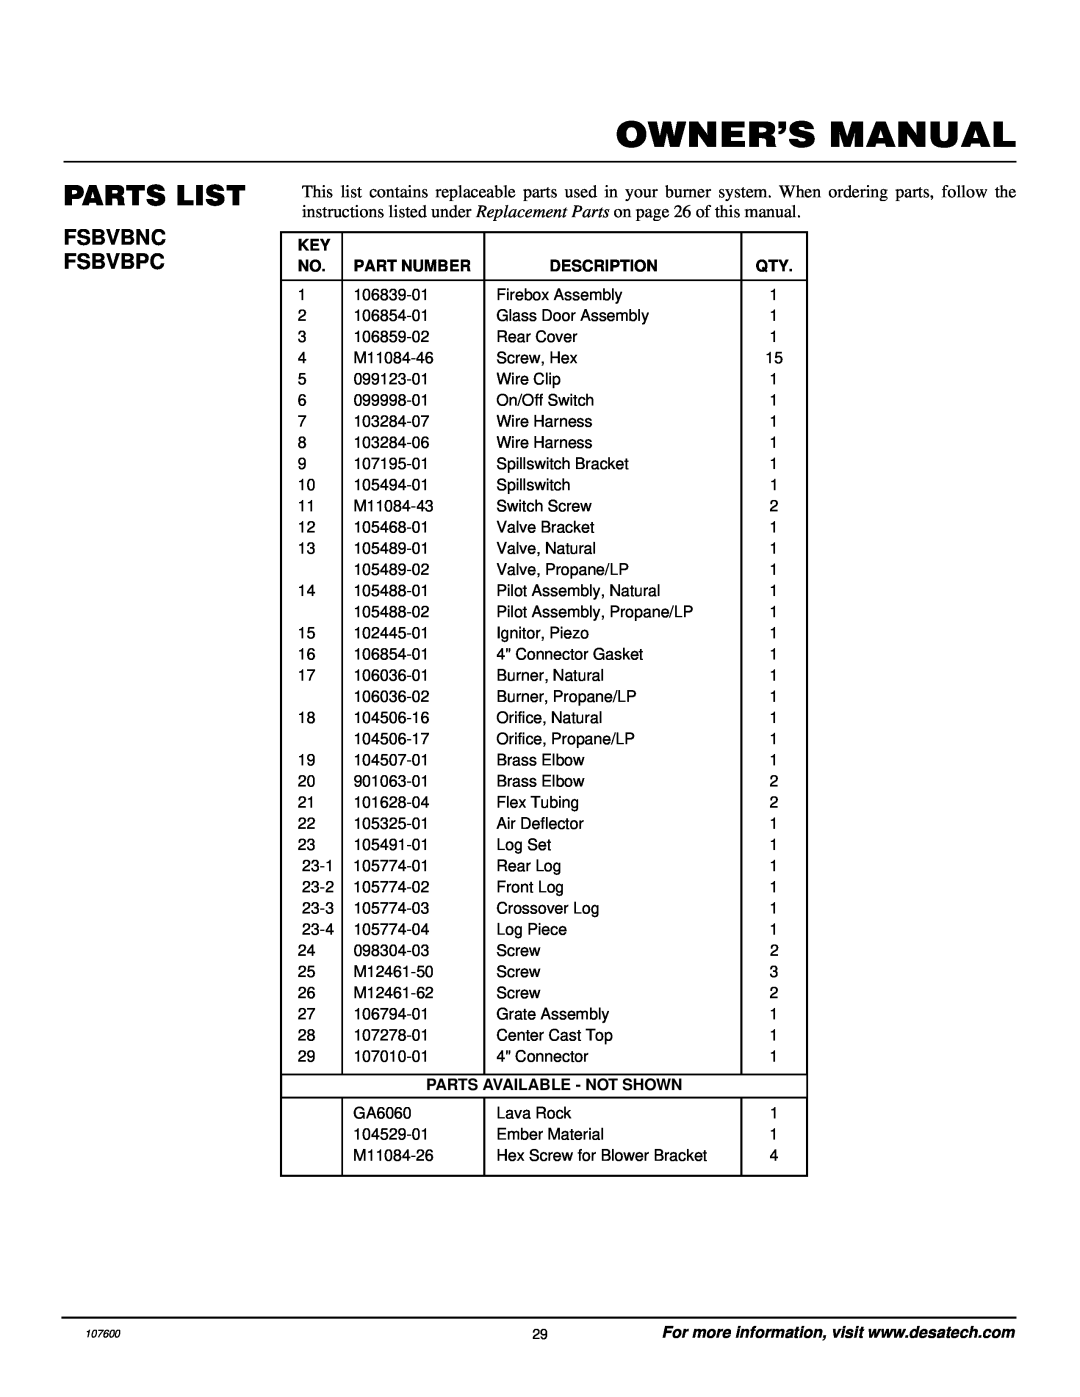 Desa FSBVBPC, FSBVBNC installation manual Parts List, Fsbvbnc Fsbvbpc 